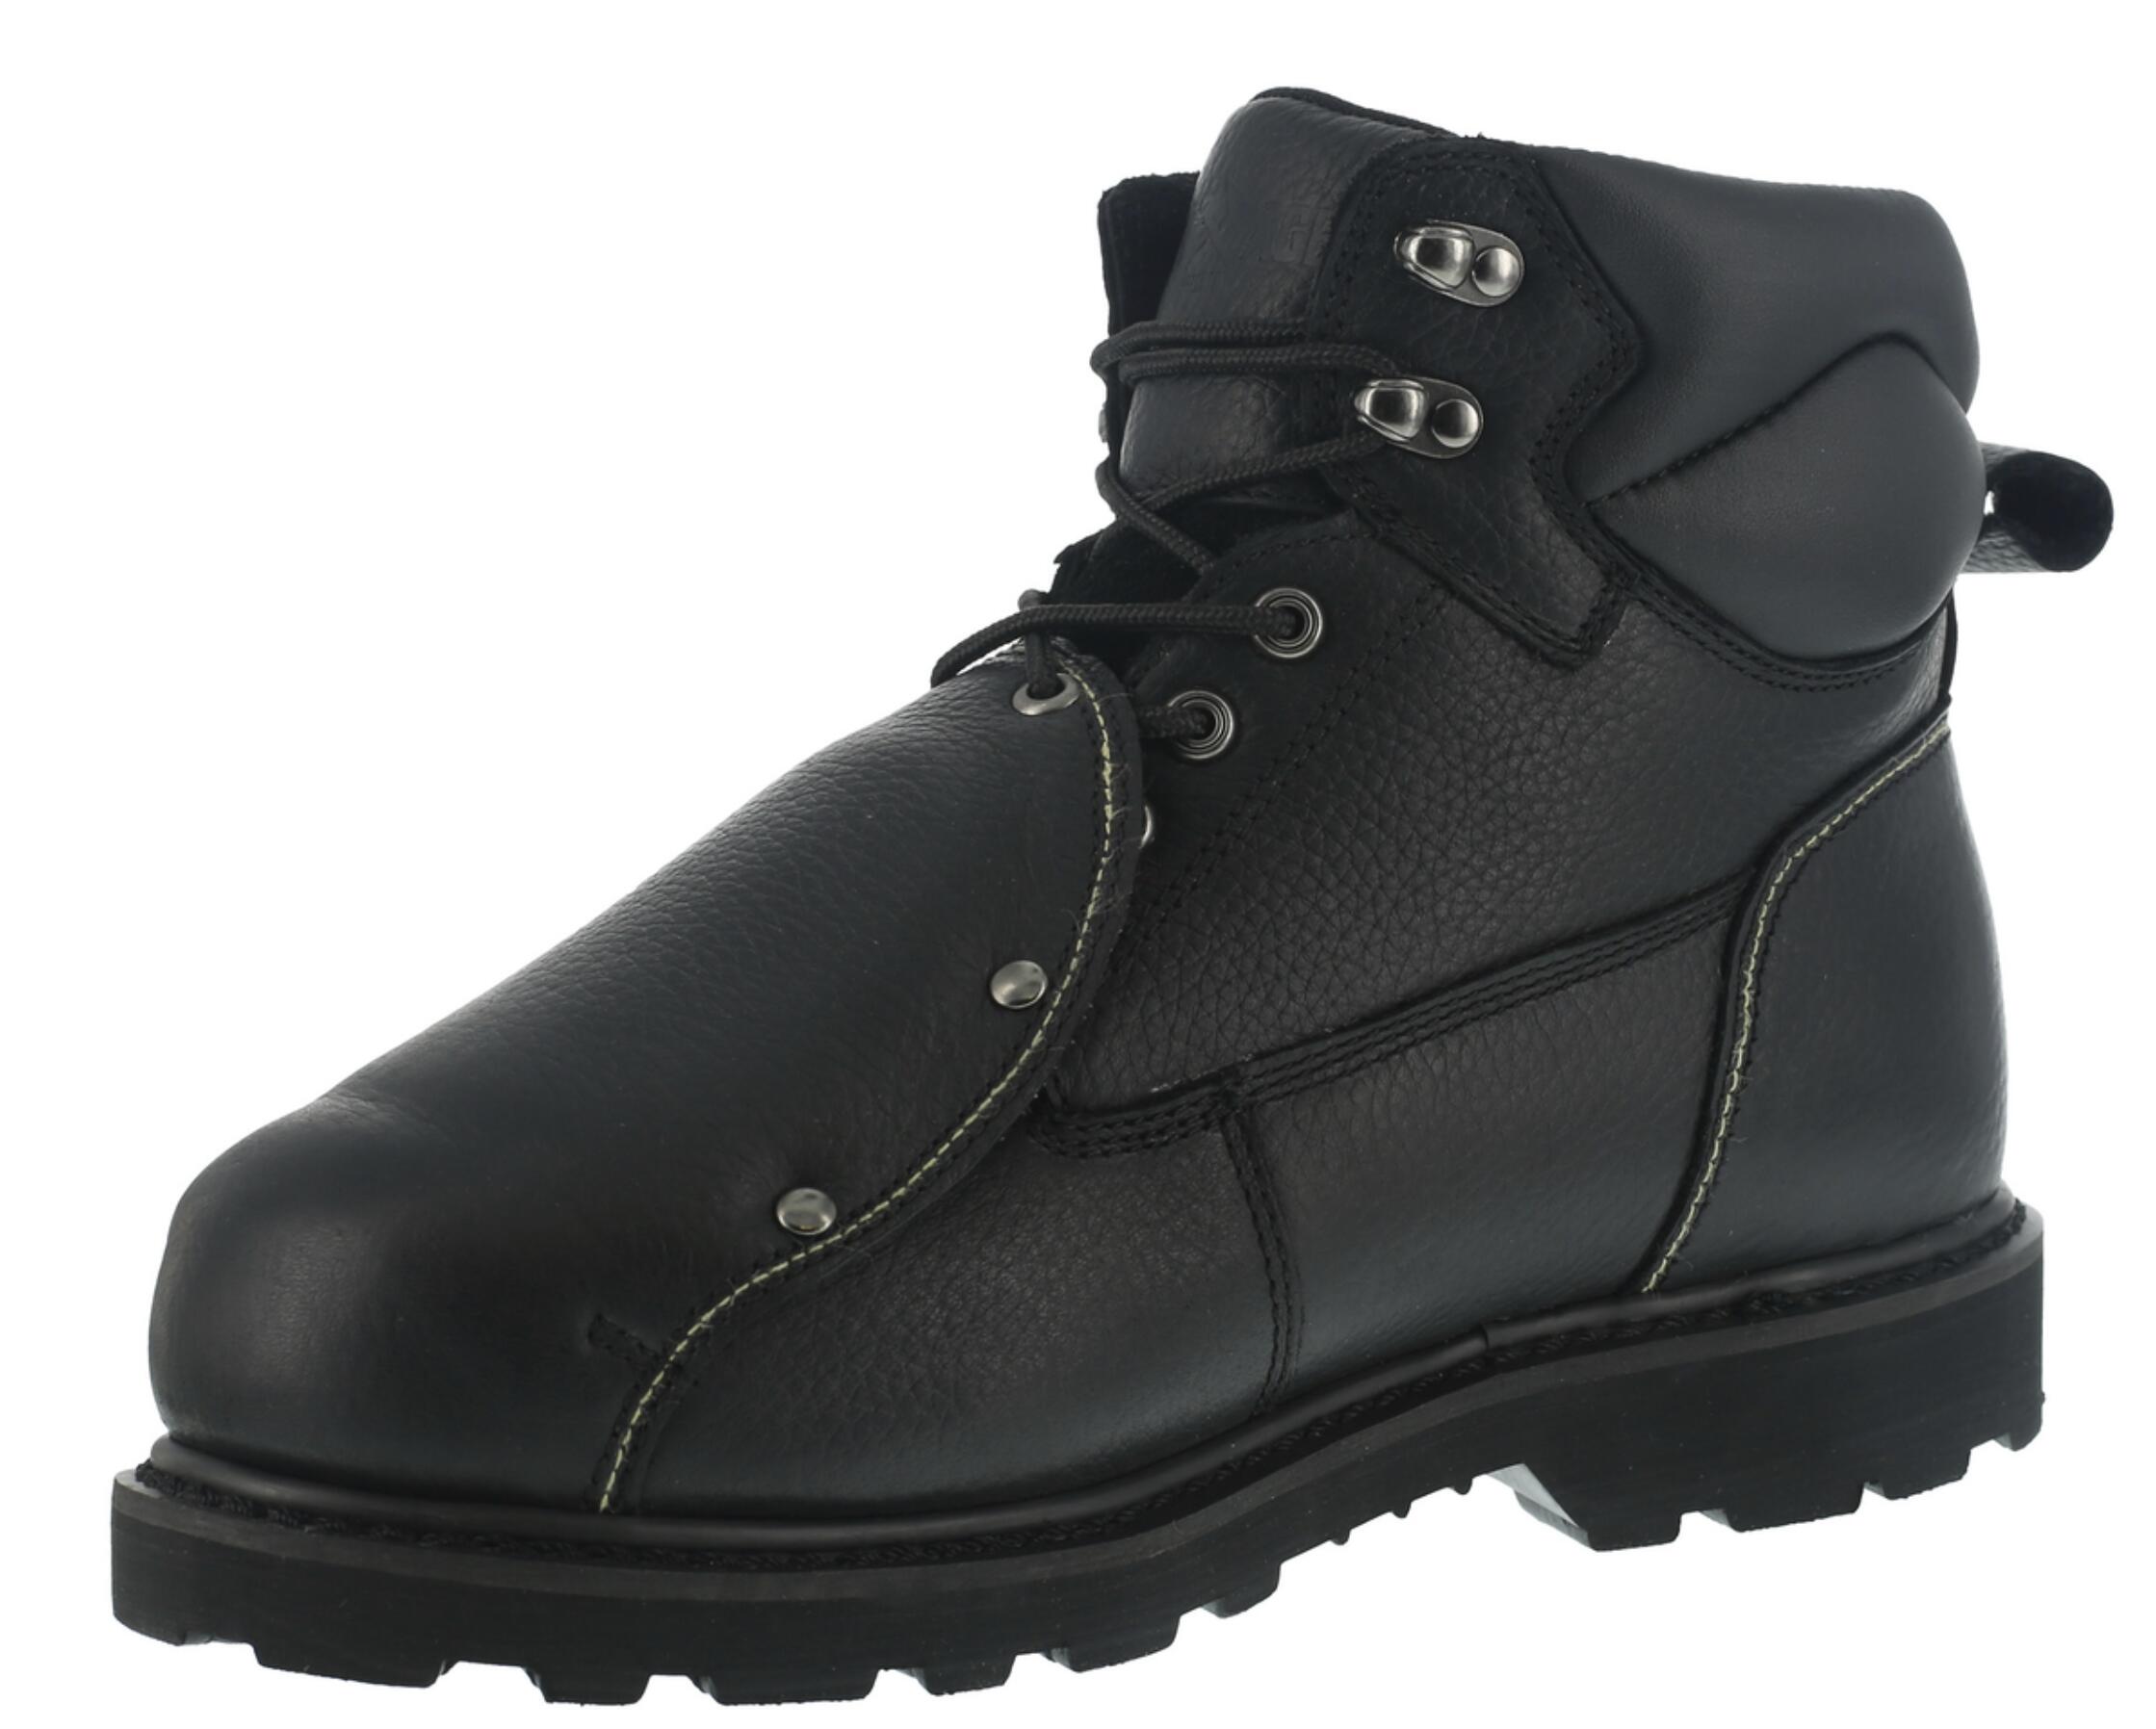 6 IN. Black Groundbreaker Steel toe Vibram sole Work Boot with External Met Guard